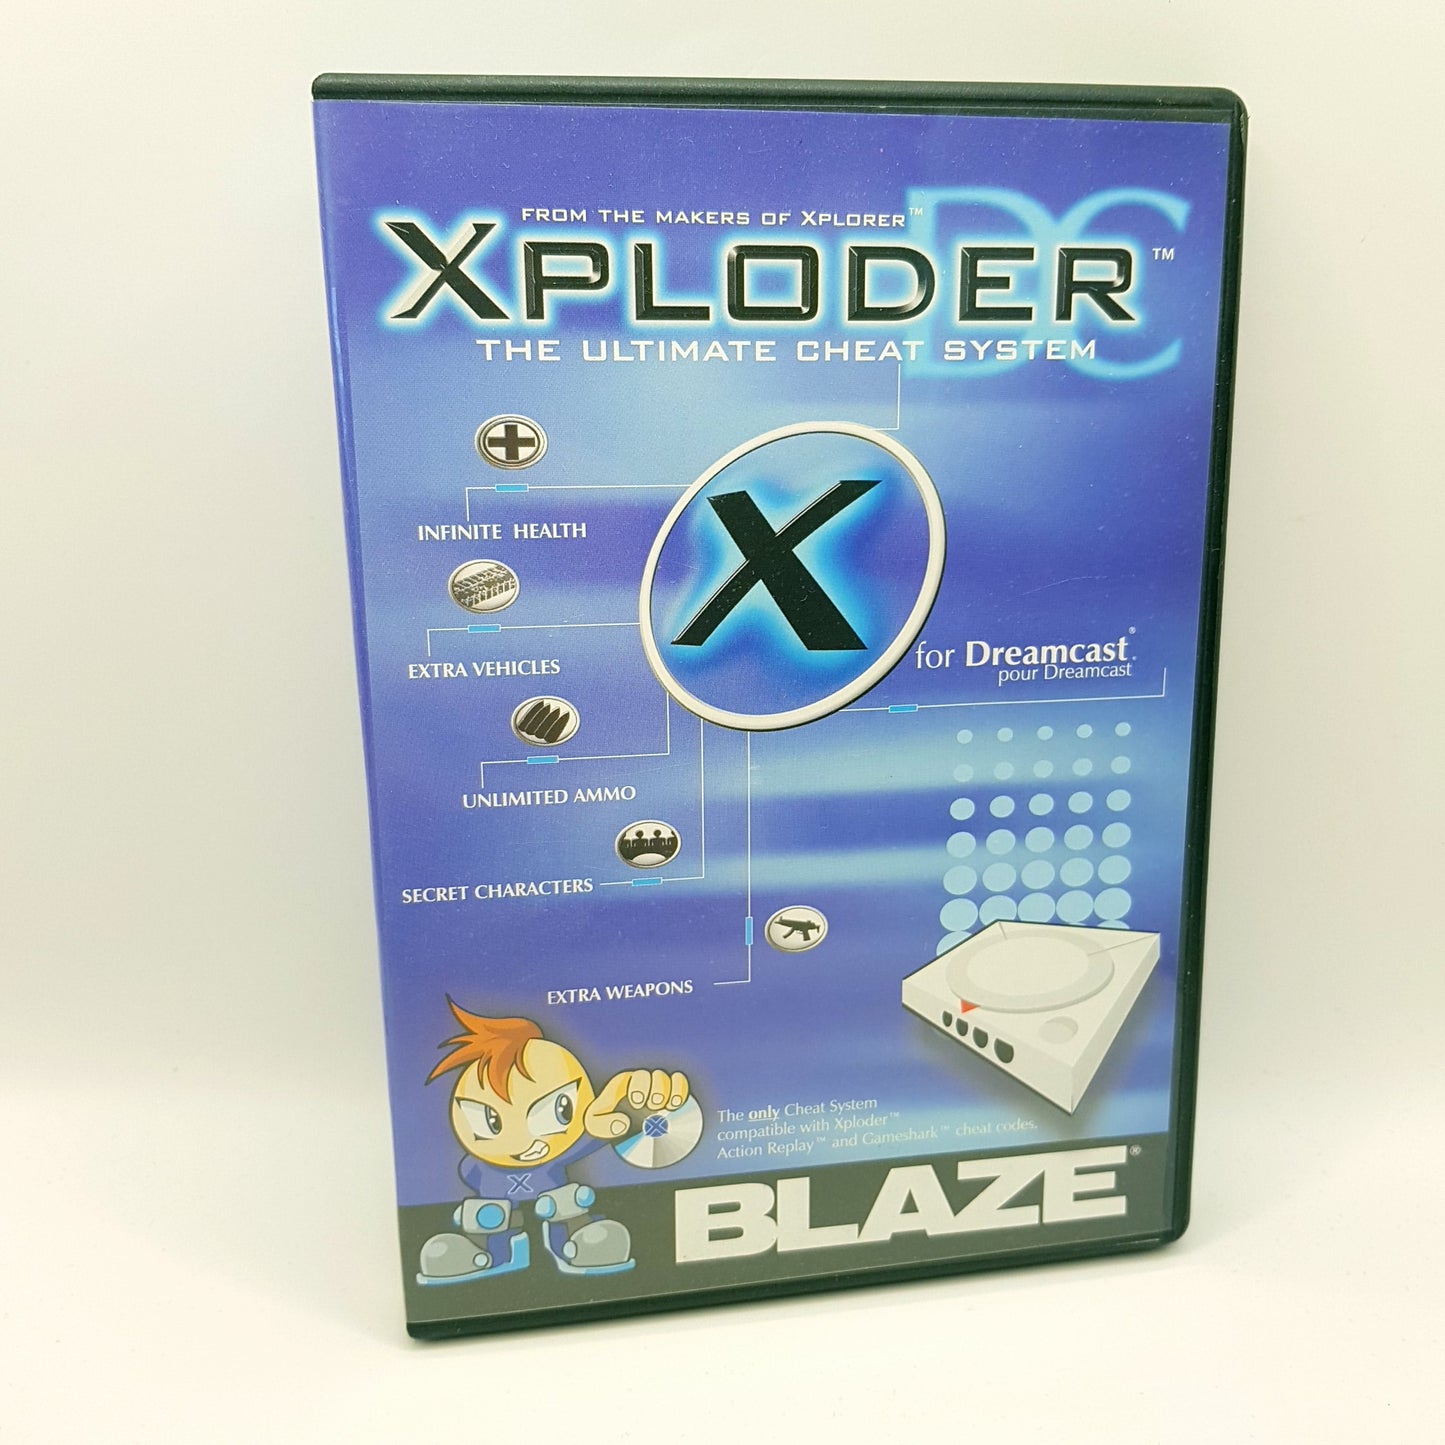 Xploder Ultimate Cheat System for Dreamcast - Blaze - komplett mit OVP - gebraucht